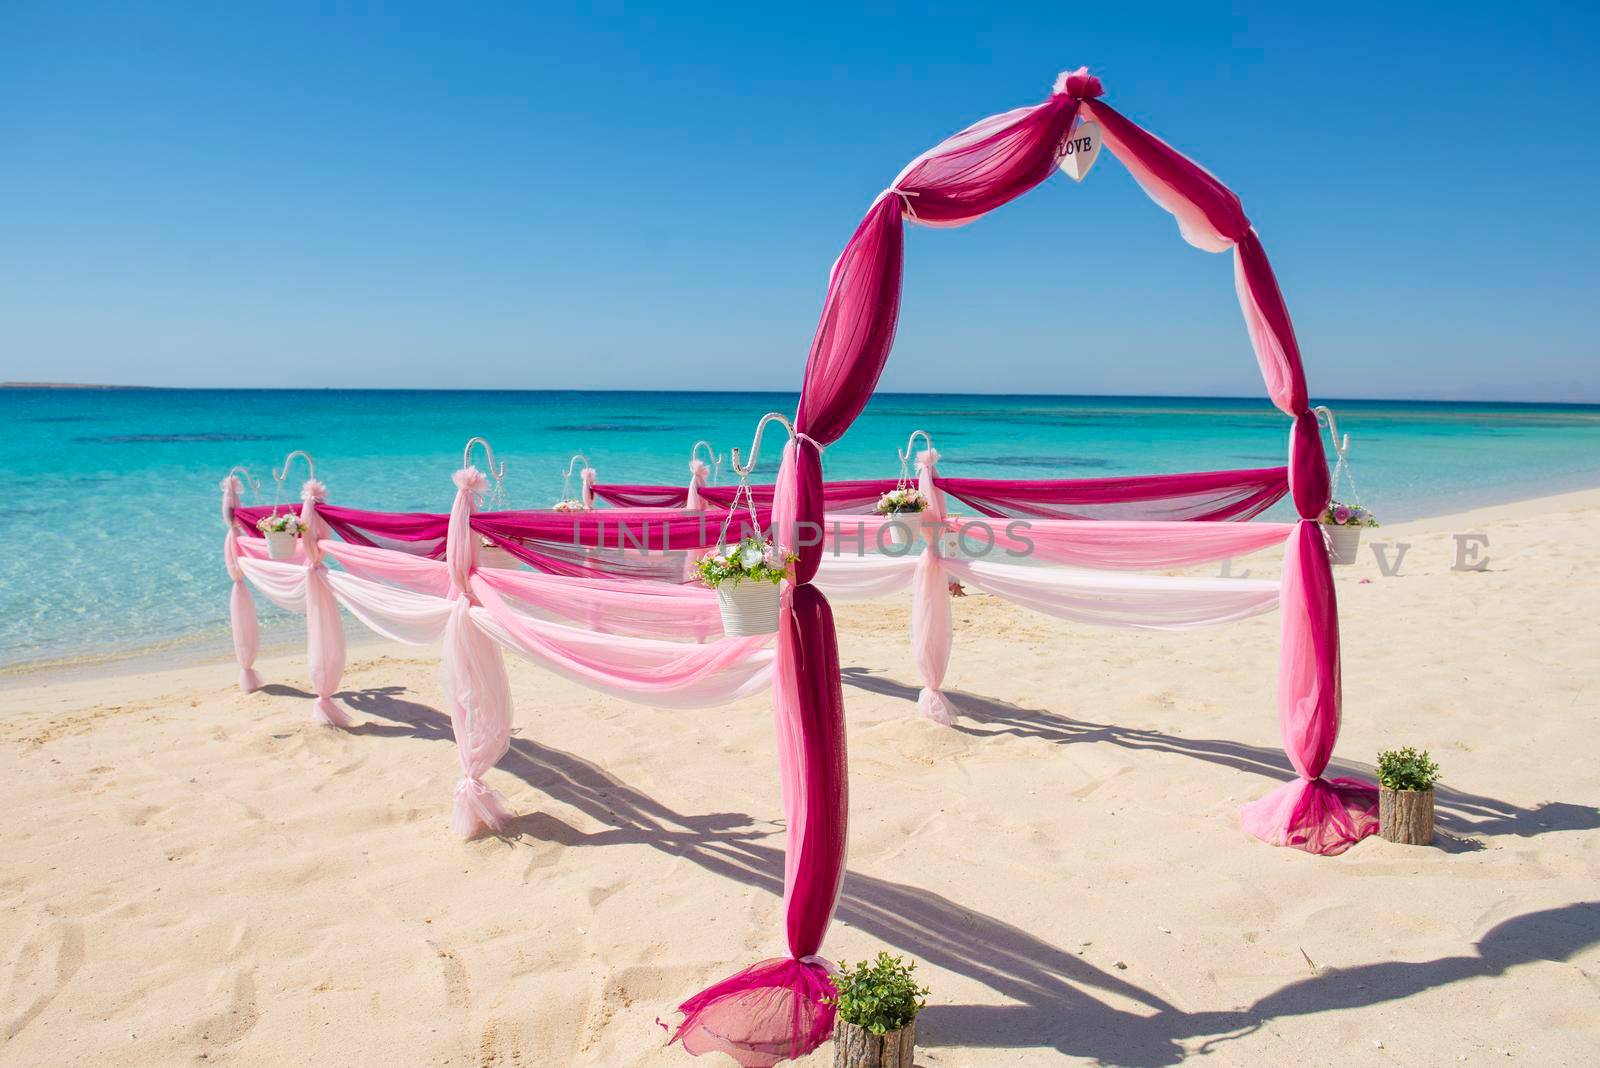 Wedding aisle setup on tropical beach by paulvinten